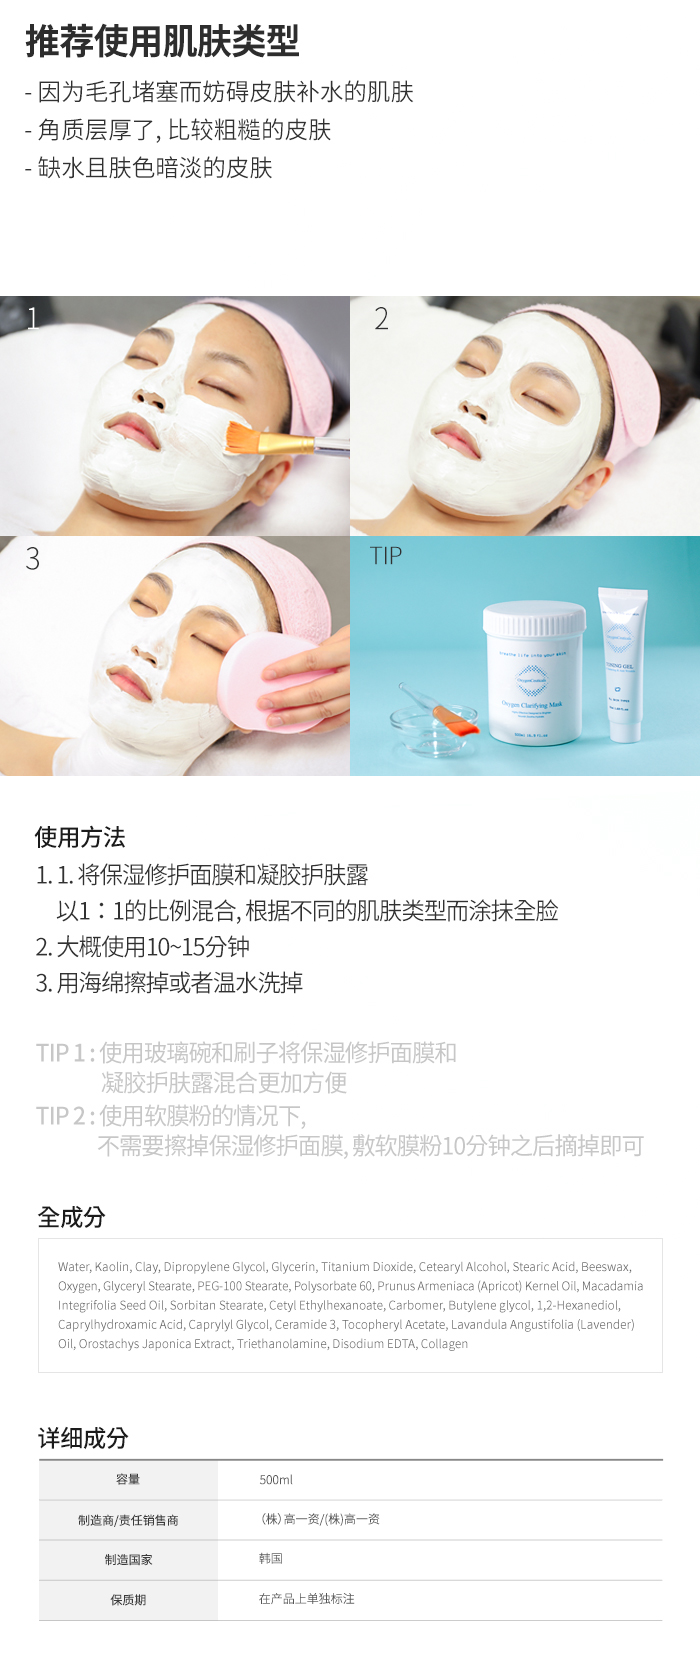 clarifying mask 保湿修护面膜 : -5